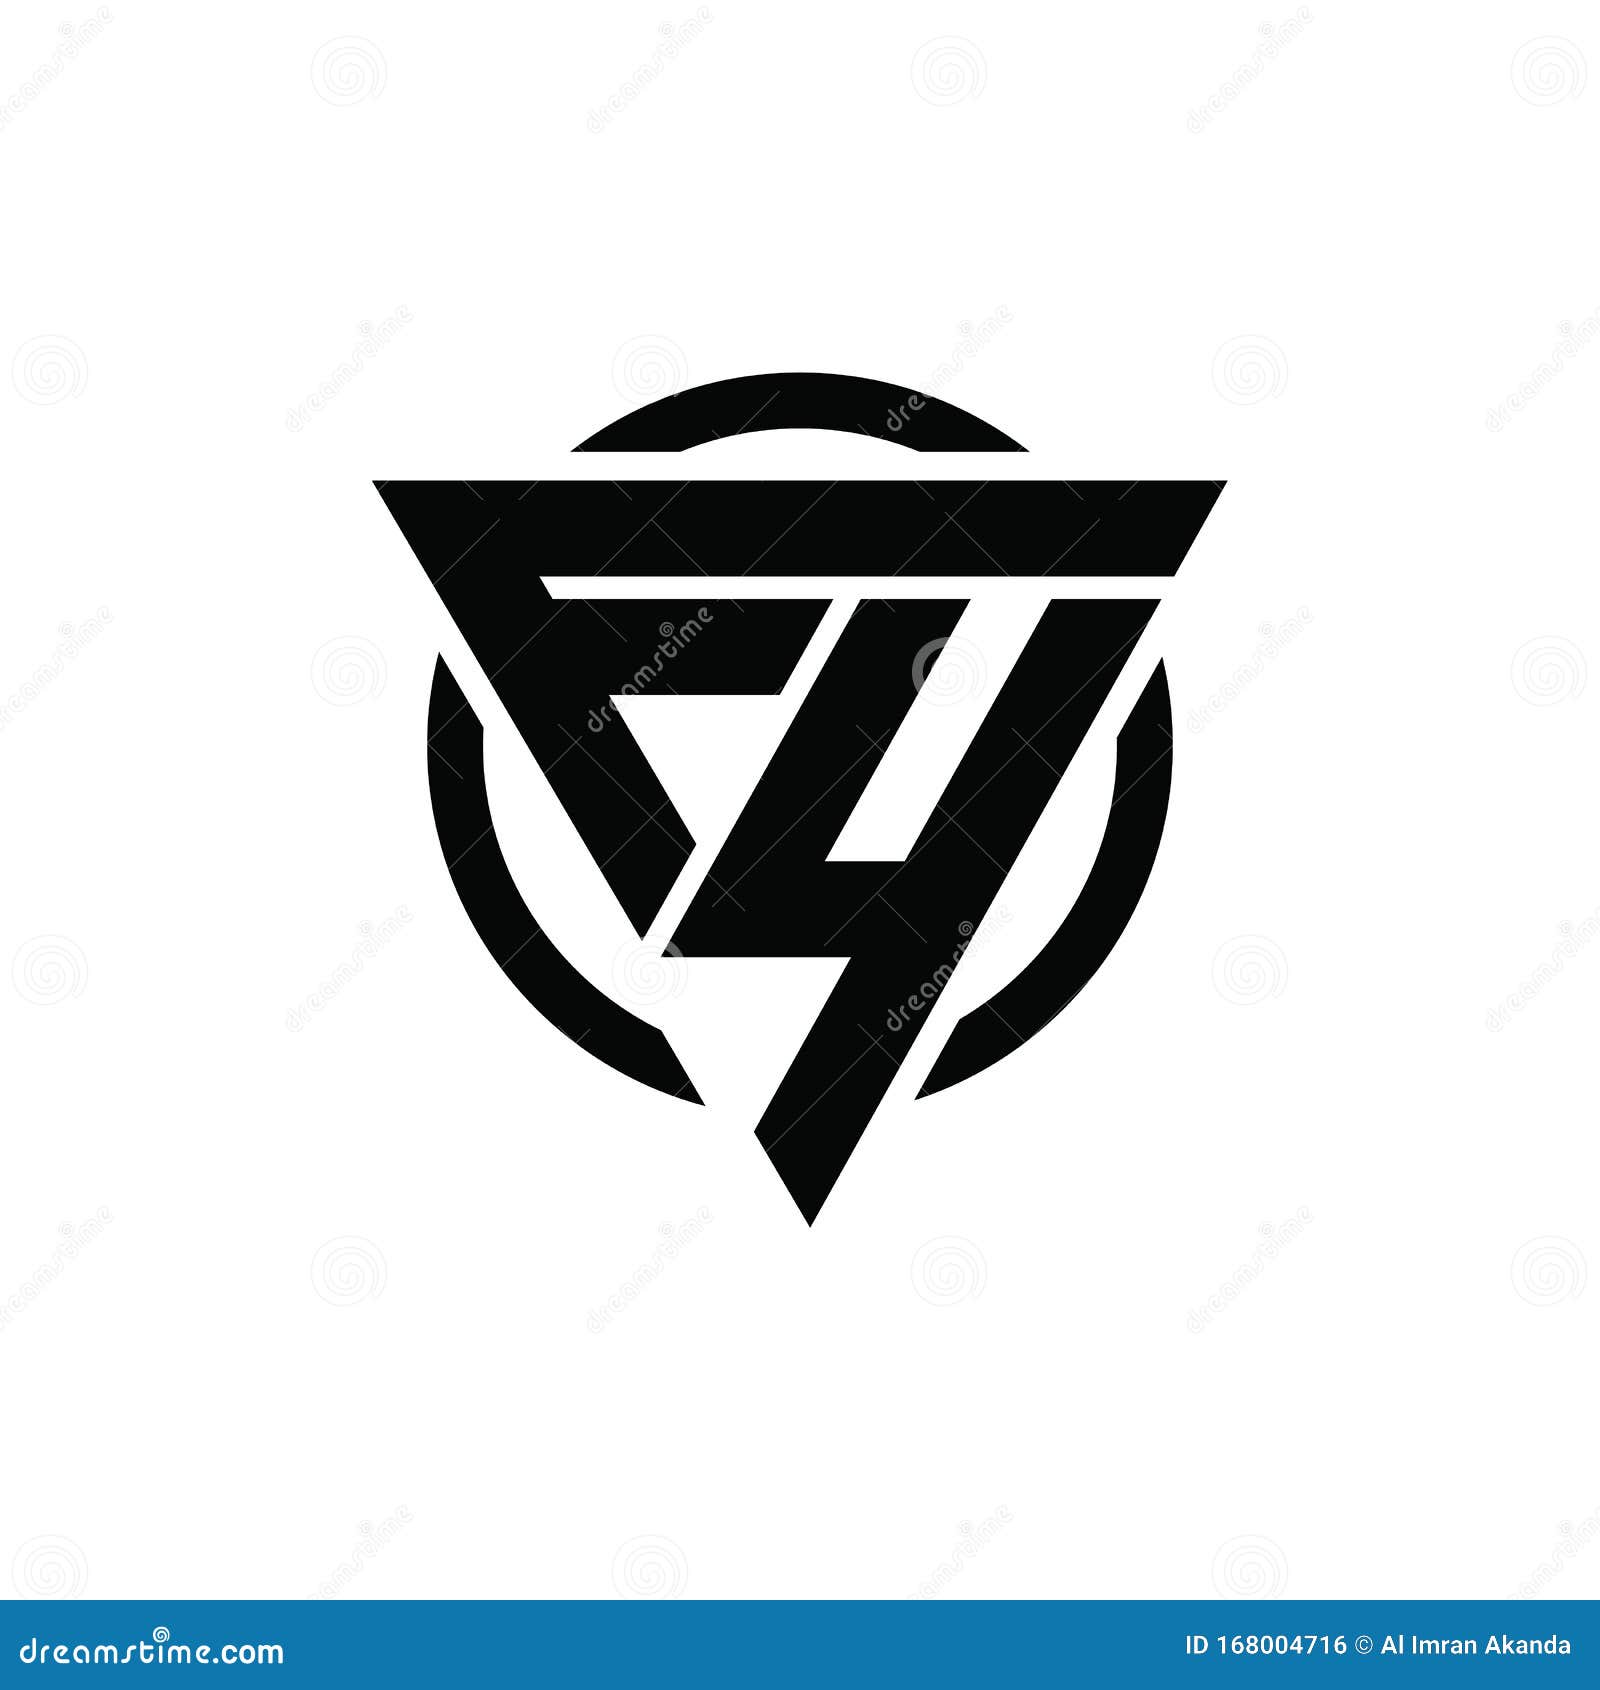 Fy Yf Treanagle Circle Logo Design Concept For Foretagets Identitet F4 4f Triangle Logo Vektor Illustrationer Illustration Av Modernt Stilsort